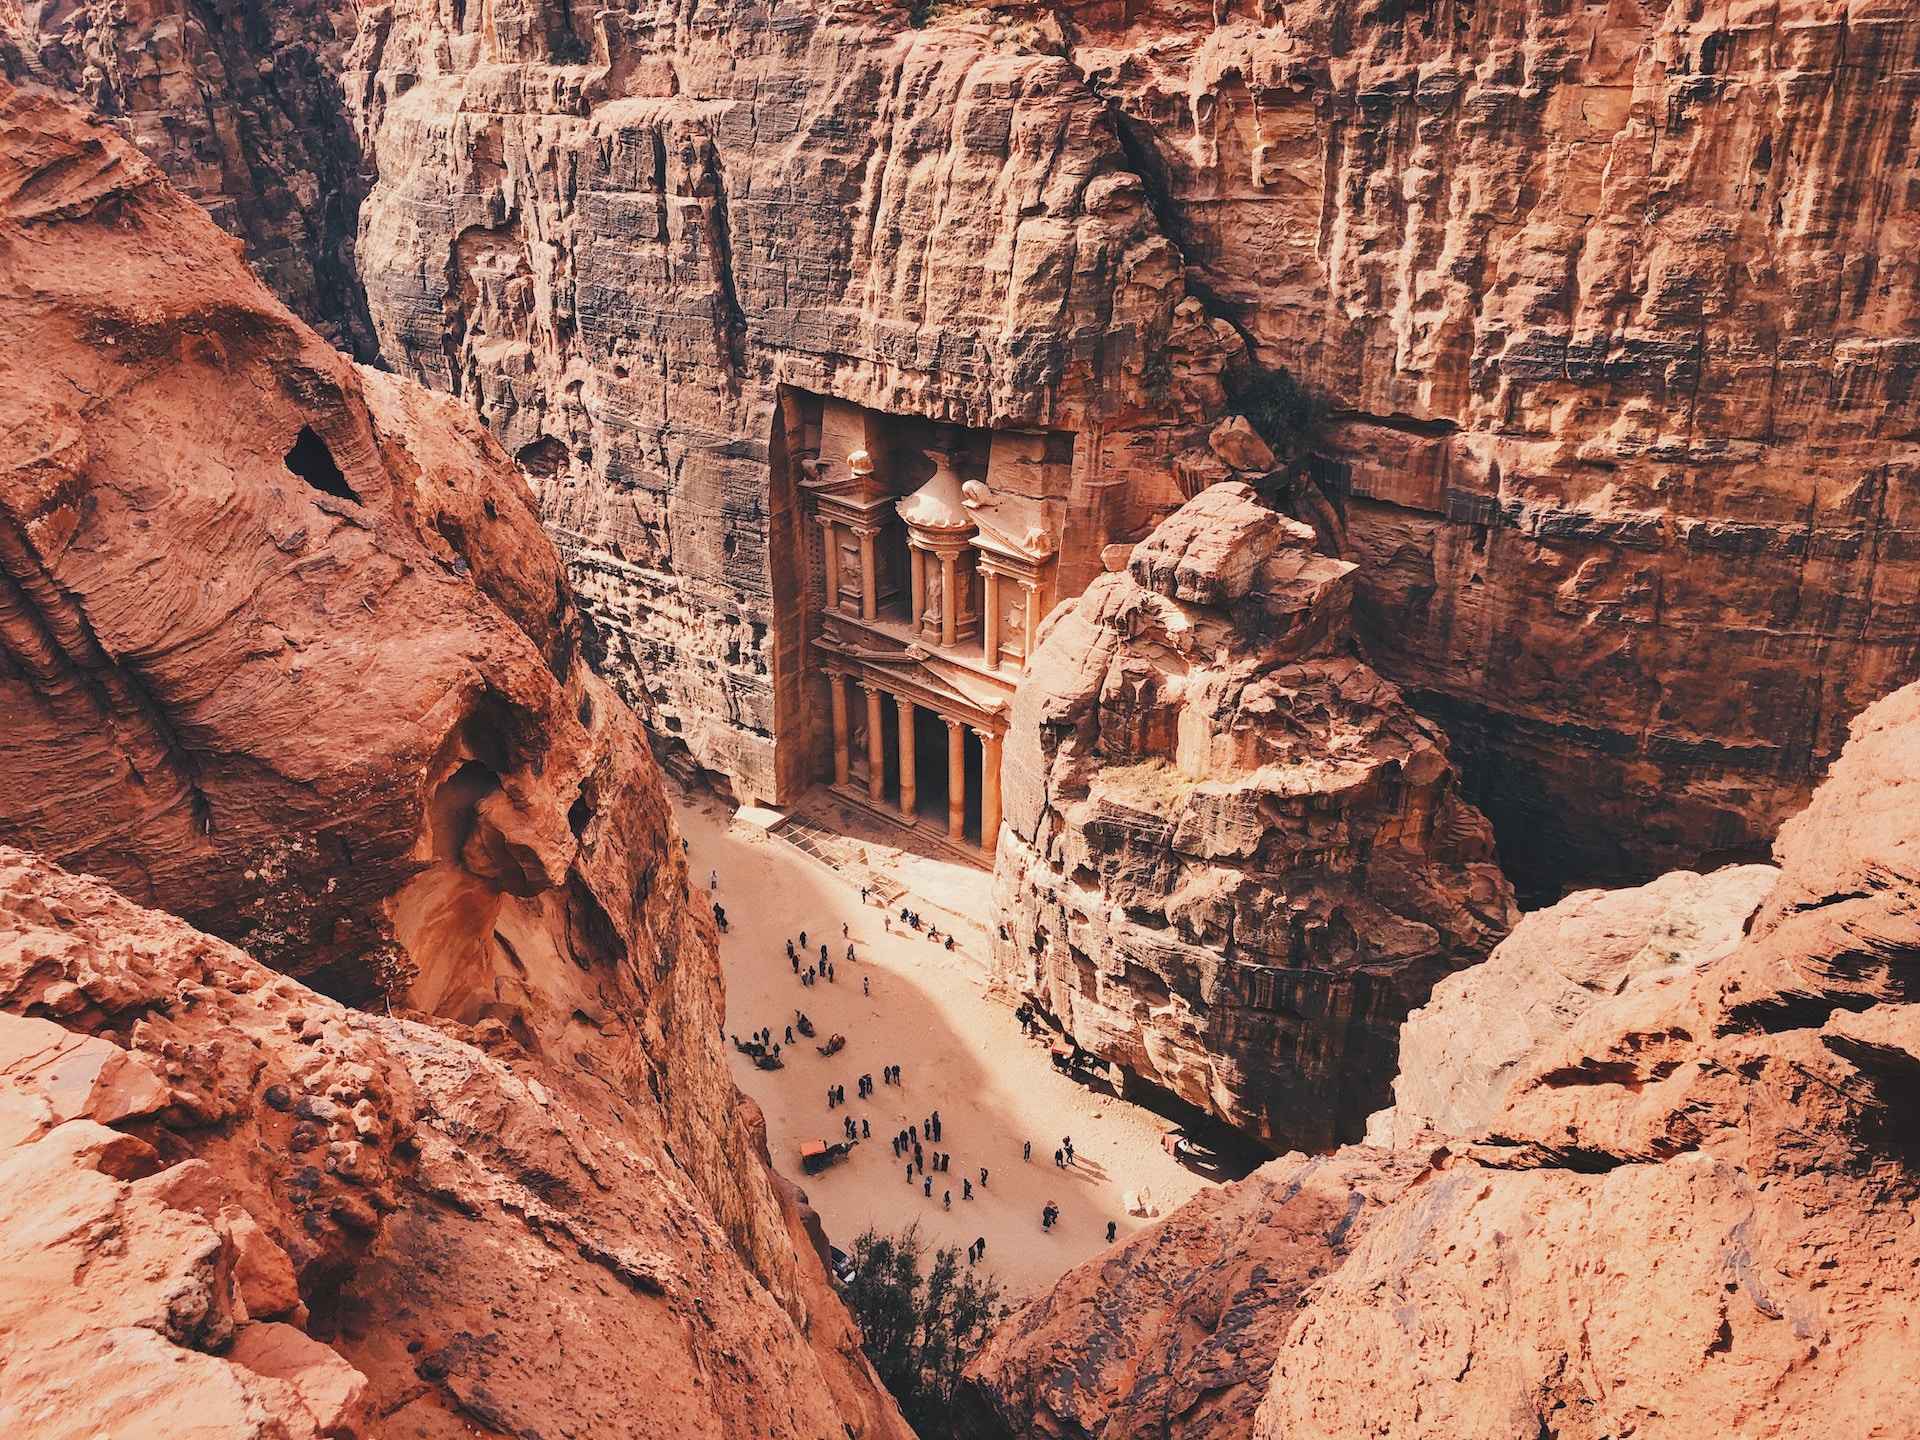 Image of Petra, Jordan - seen from above